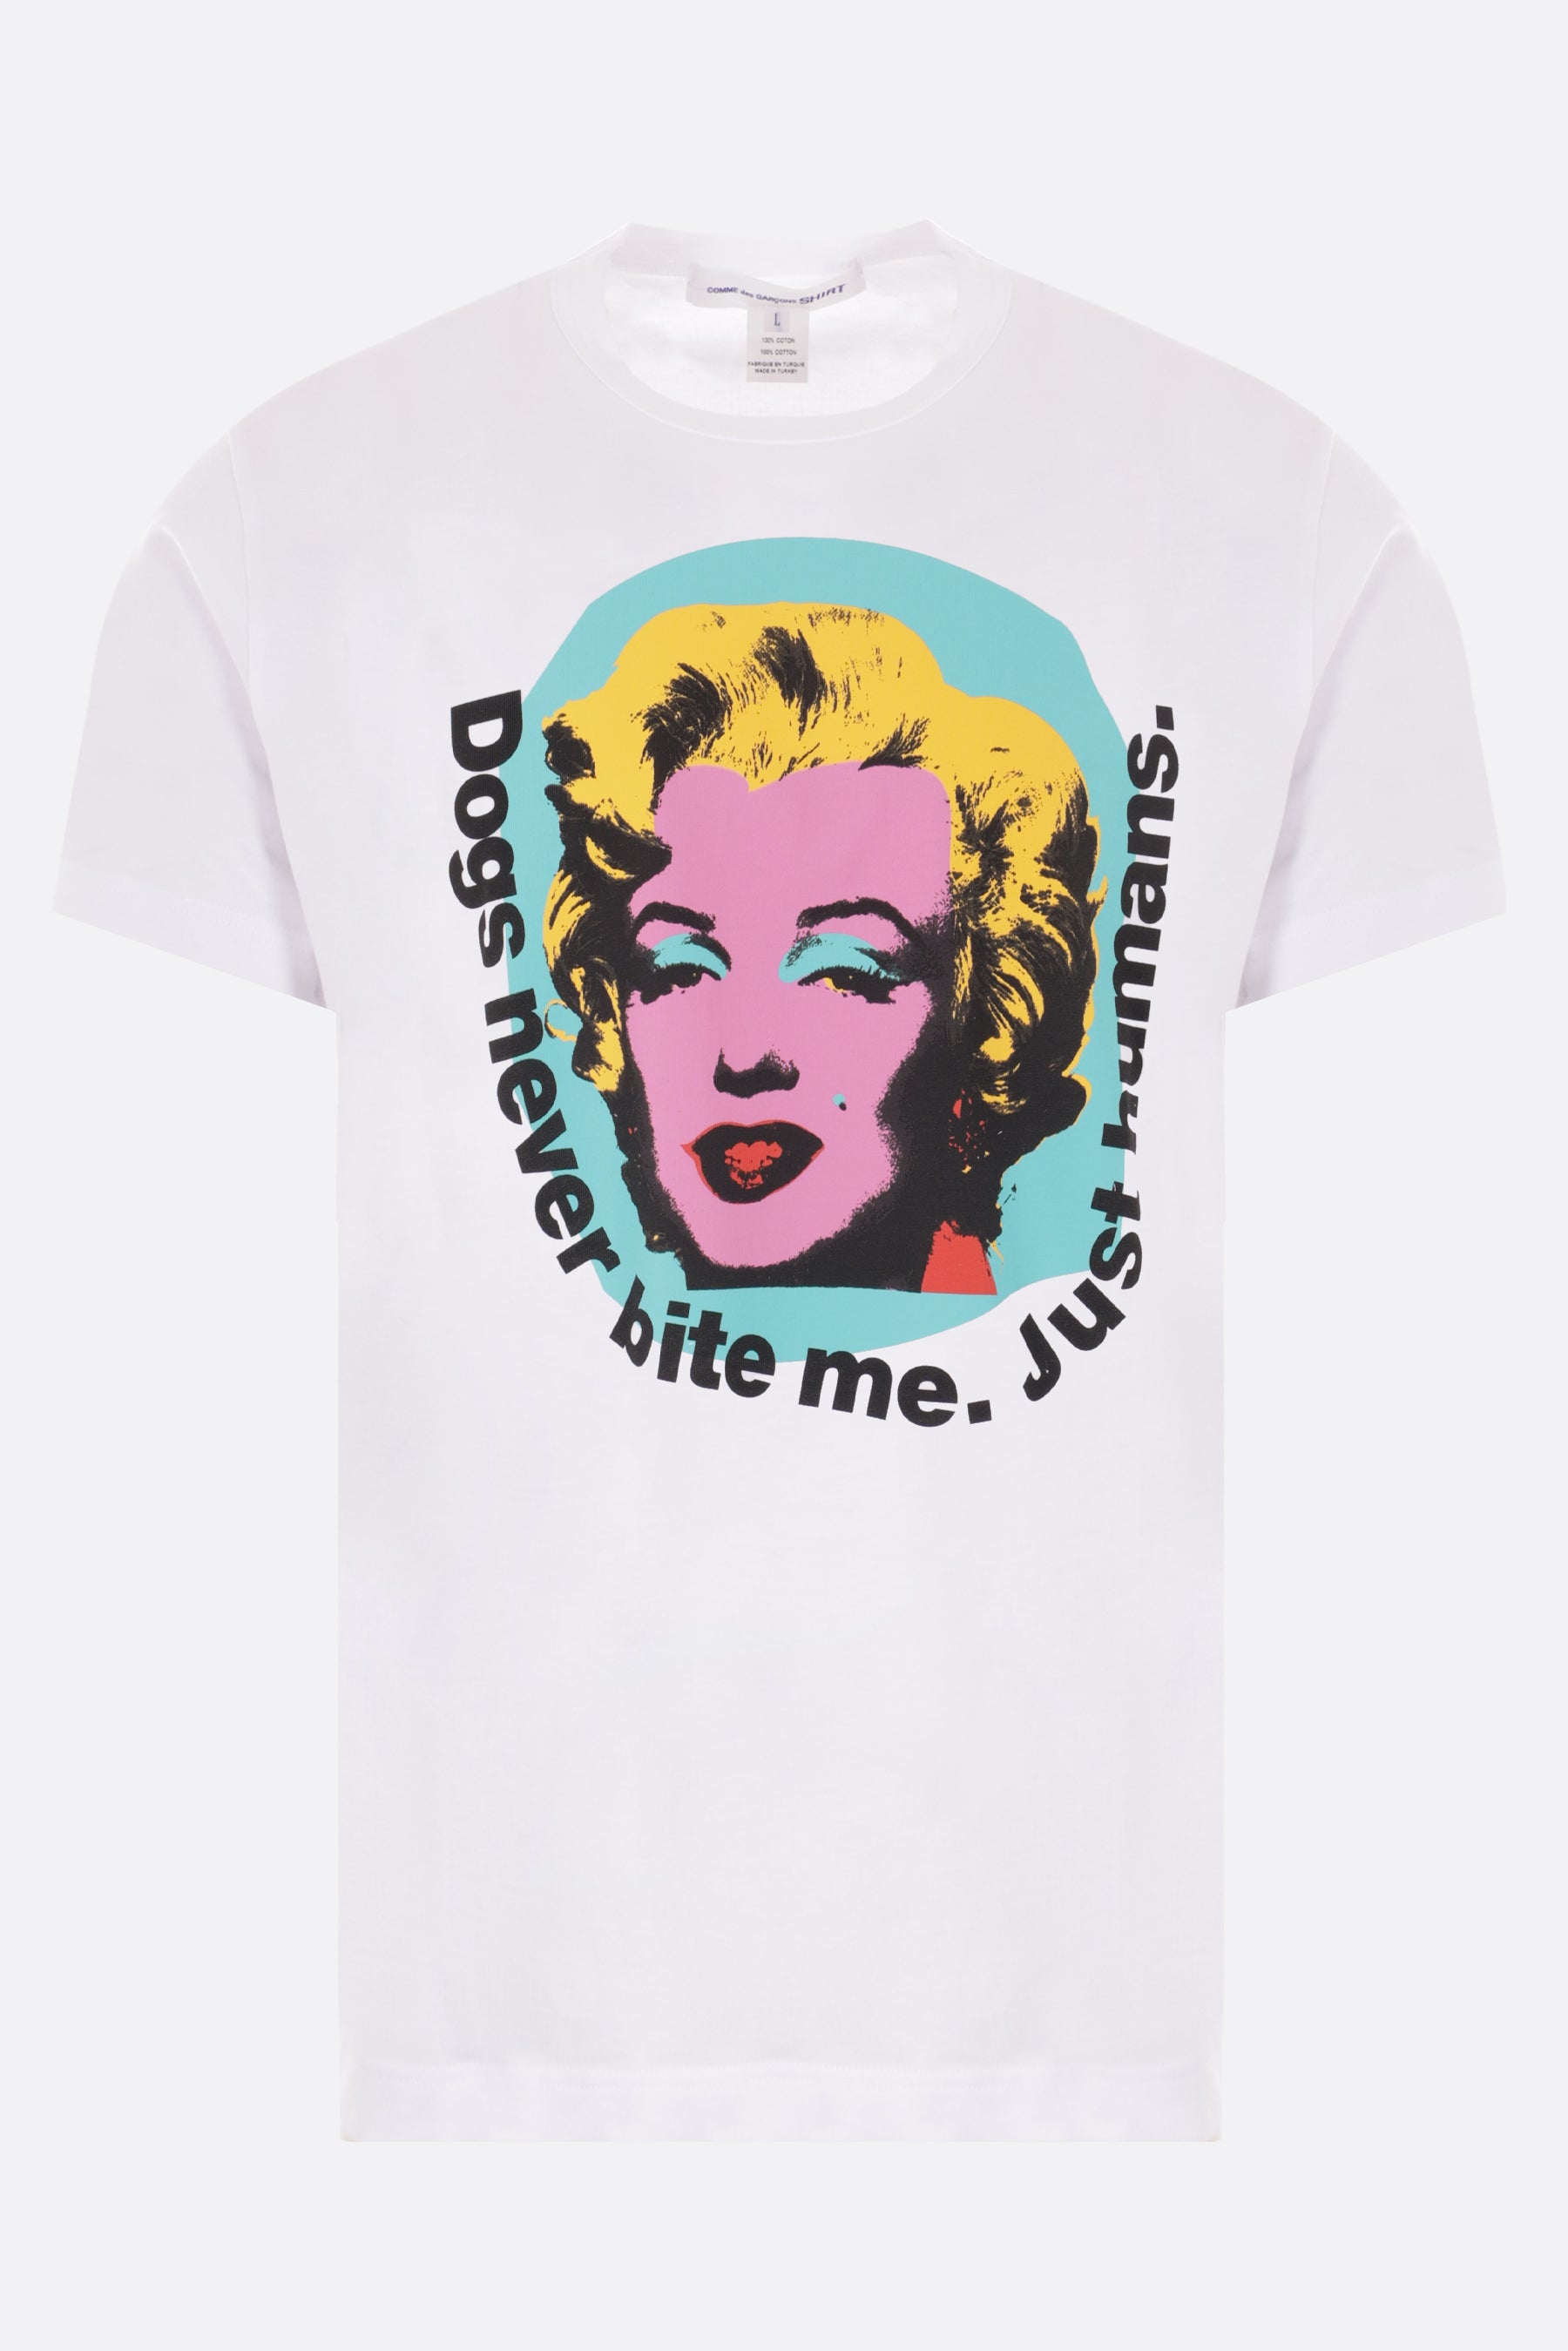 Andy Warhol - Marilyn Monroe printed cotton t-shirt